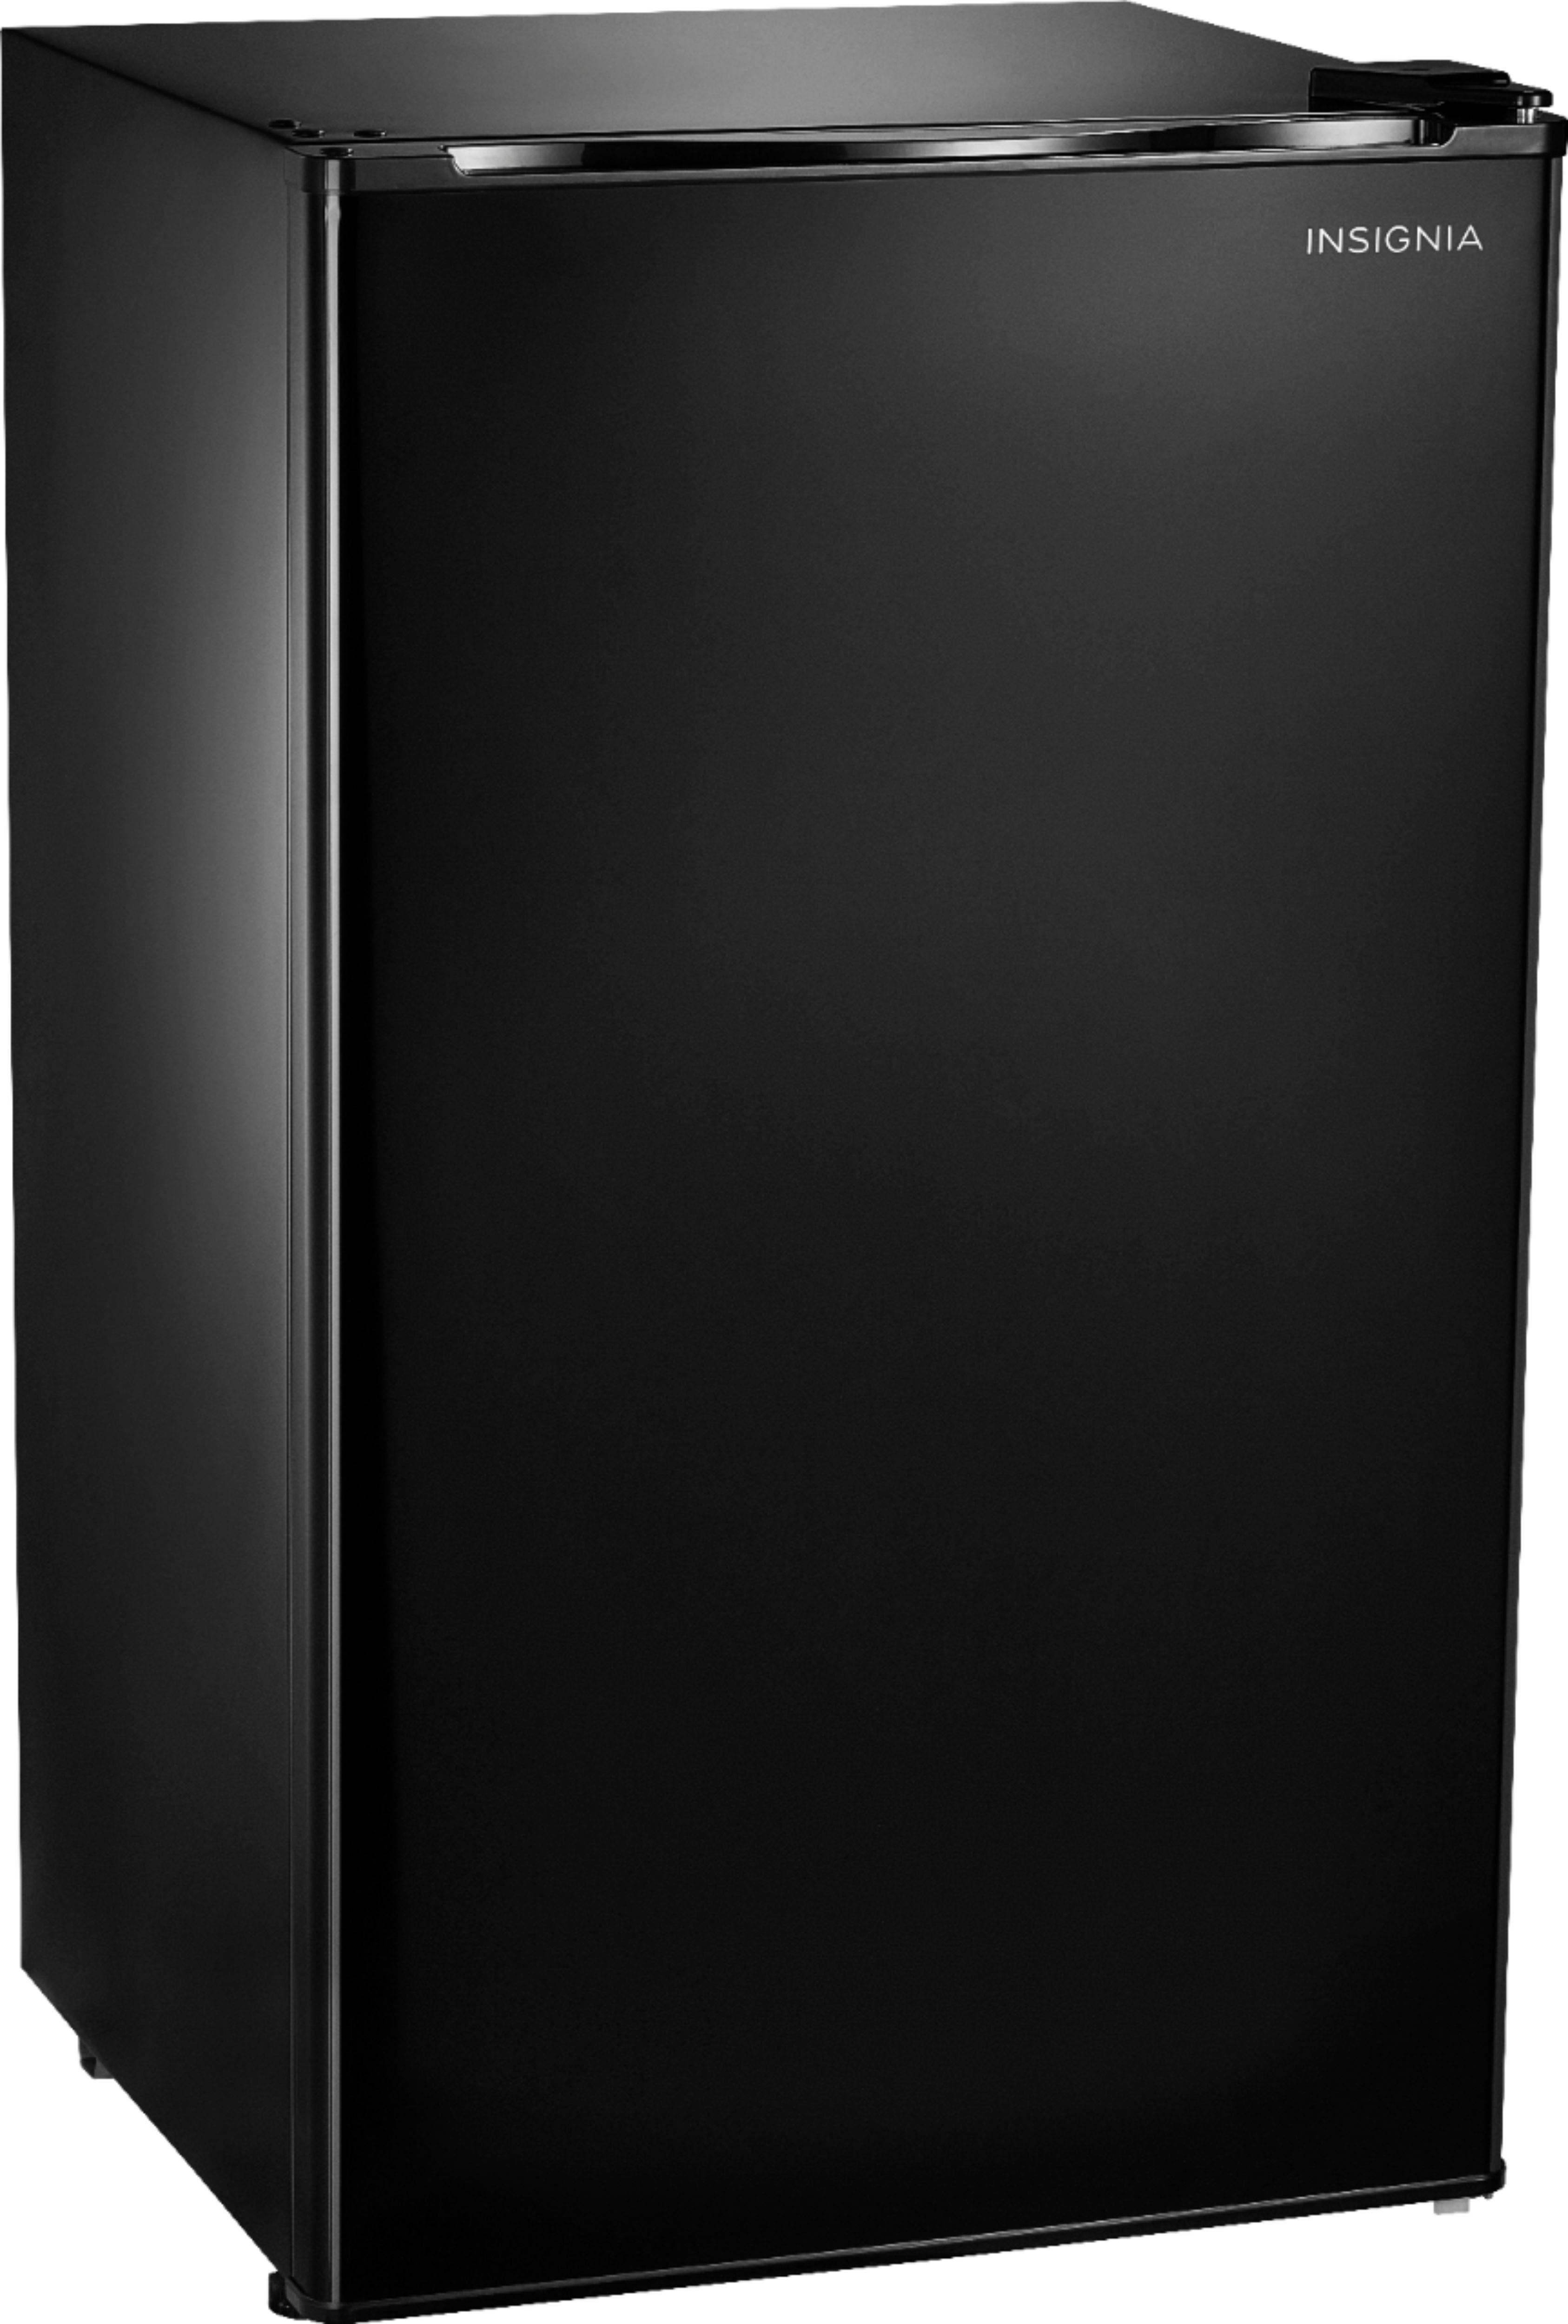 Brand New Insignia Mini Fridge - Black - appliances - by owner